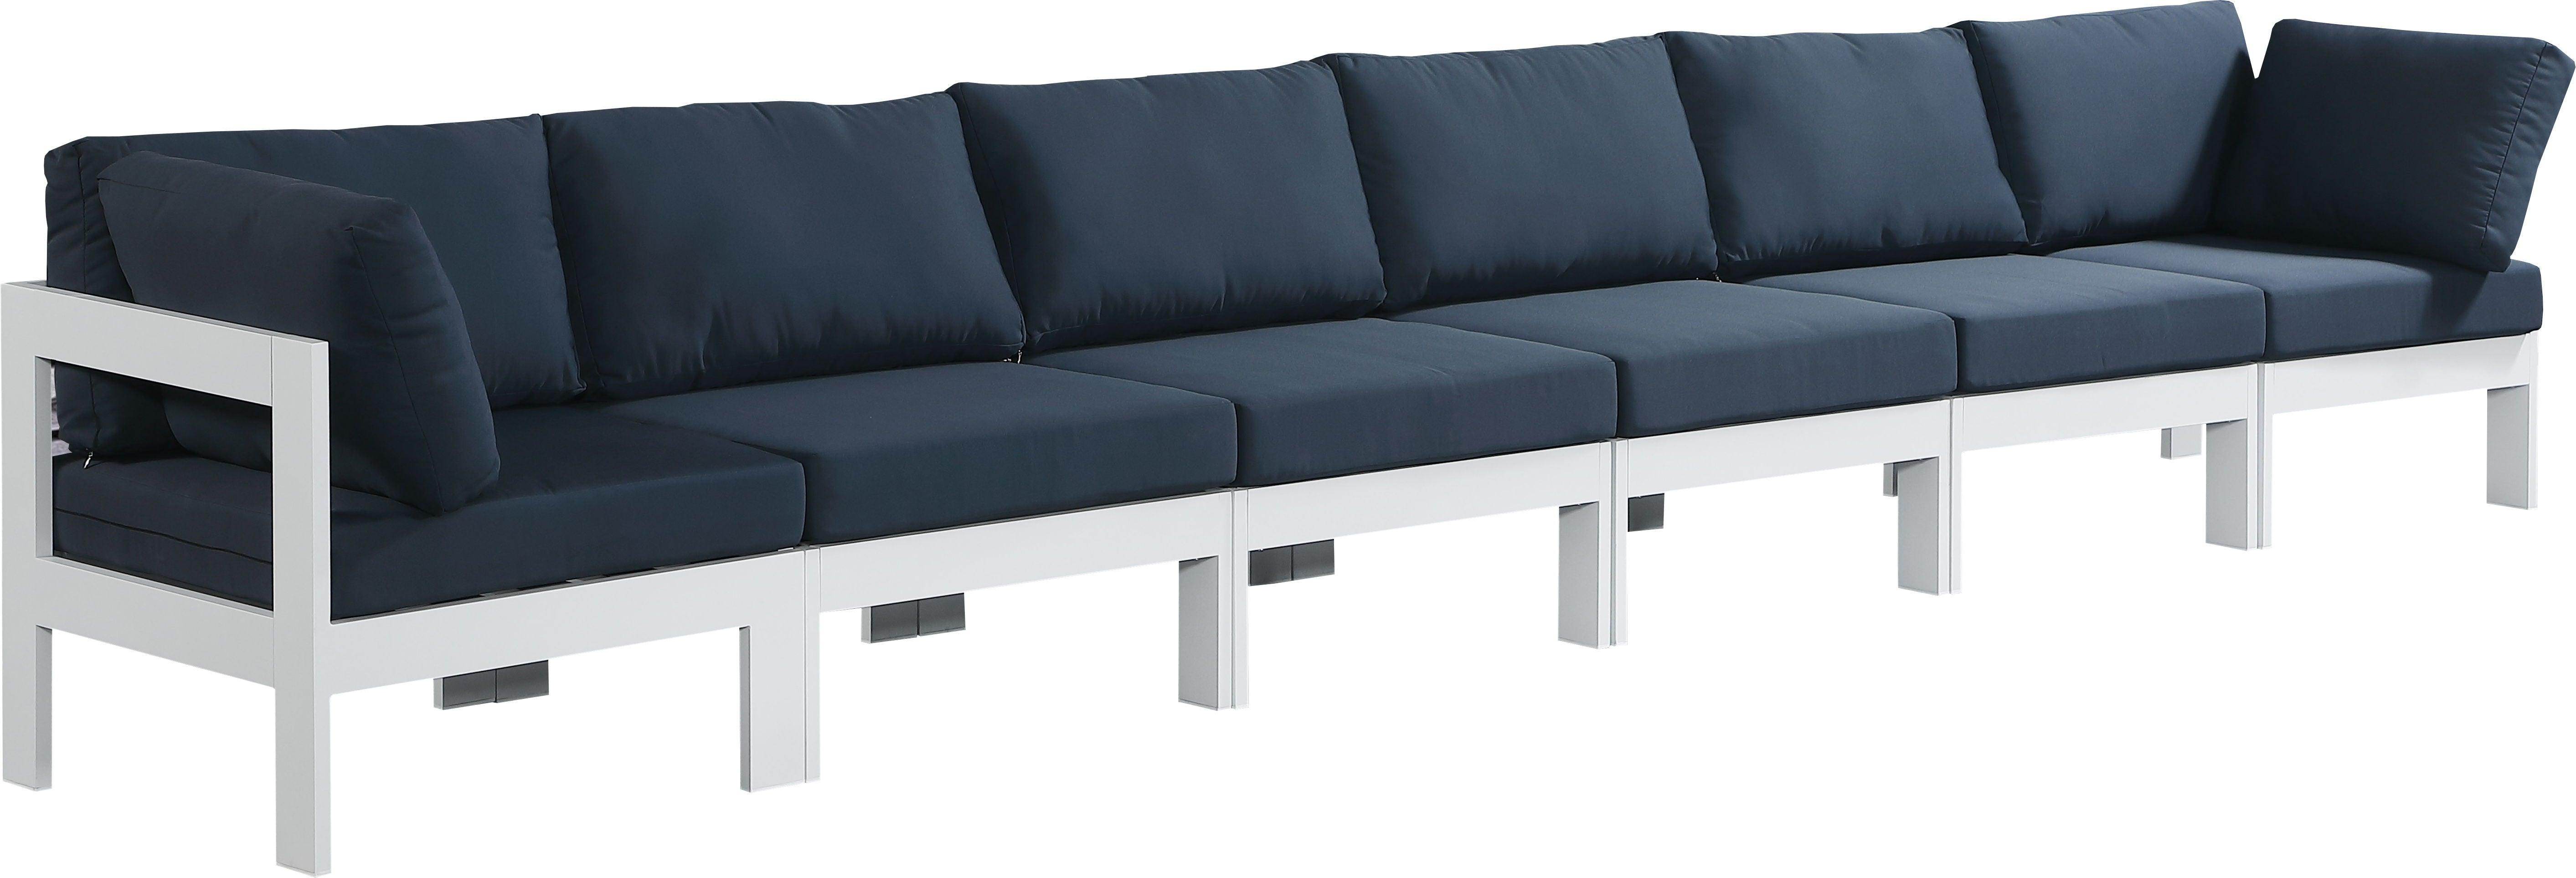 Meridian Furniture - Nizuc - Outdoor Patio Modular Sofa With Frame - Navy - 5th Avenue Furniture